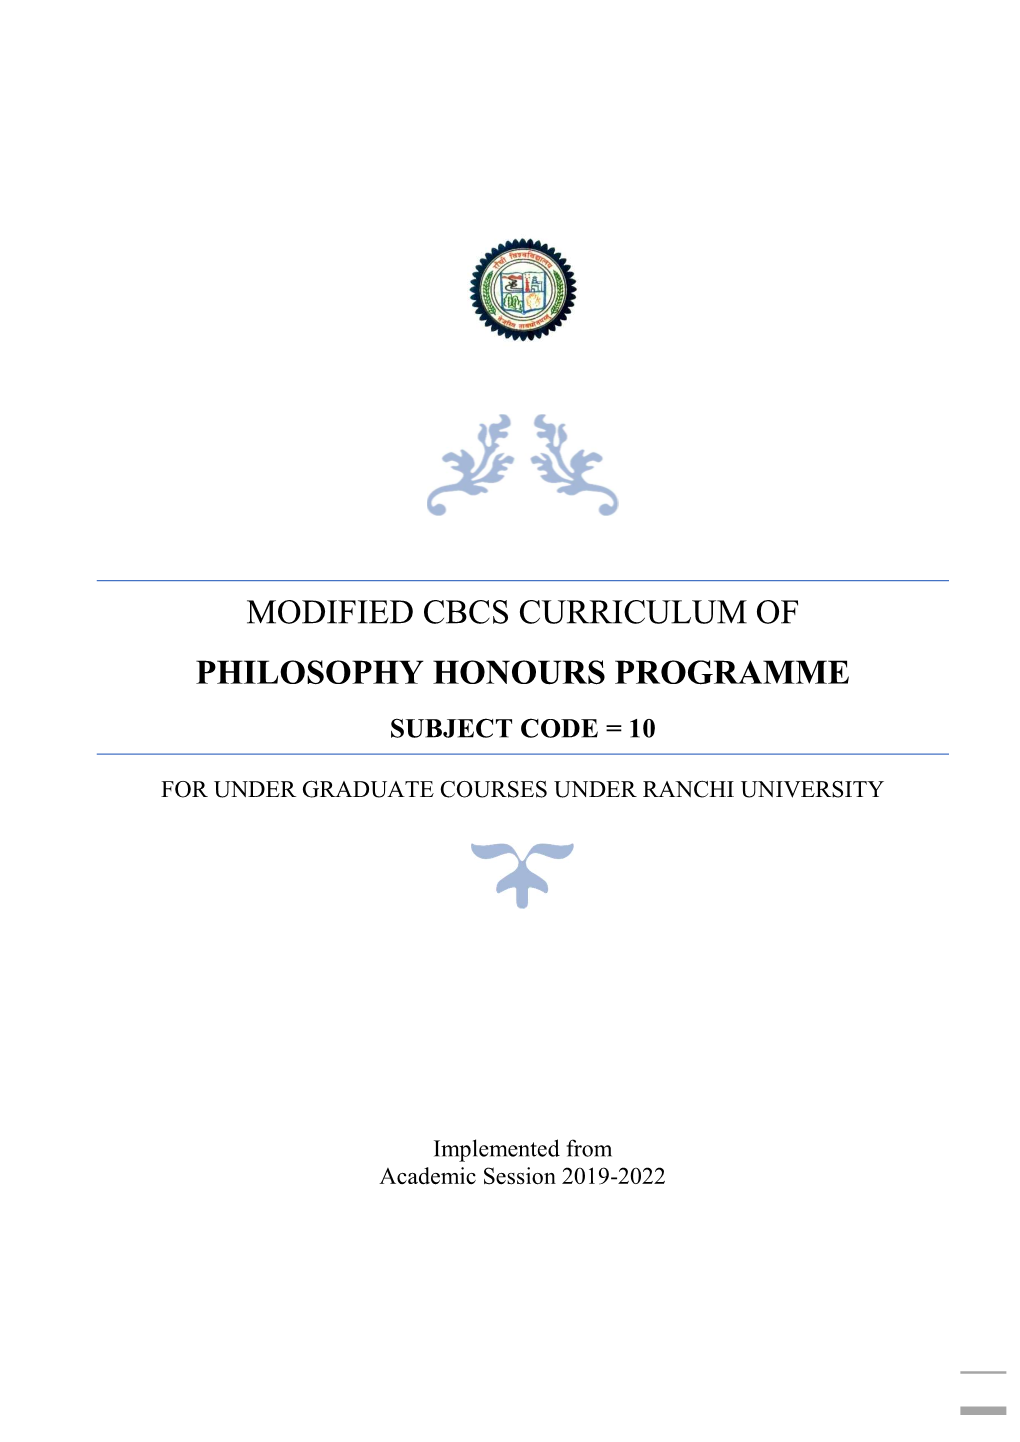 Philosophy Honours Programme Subject Code = 10